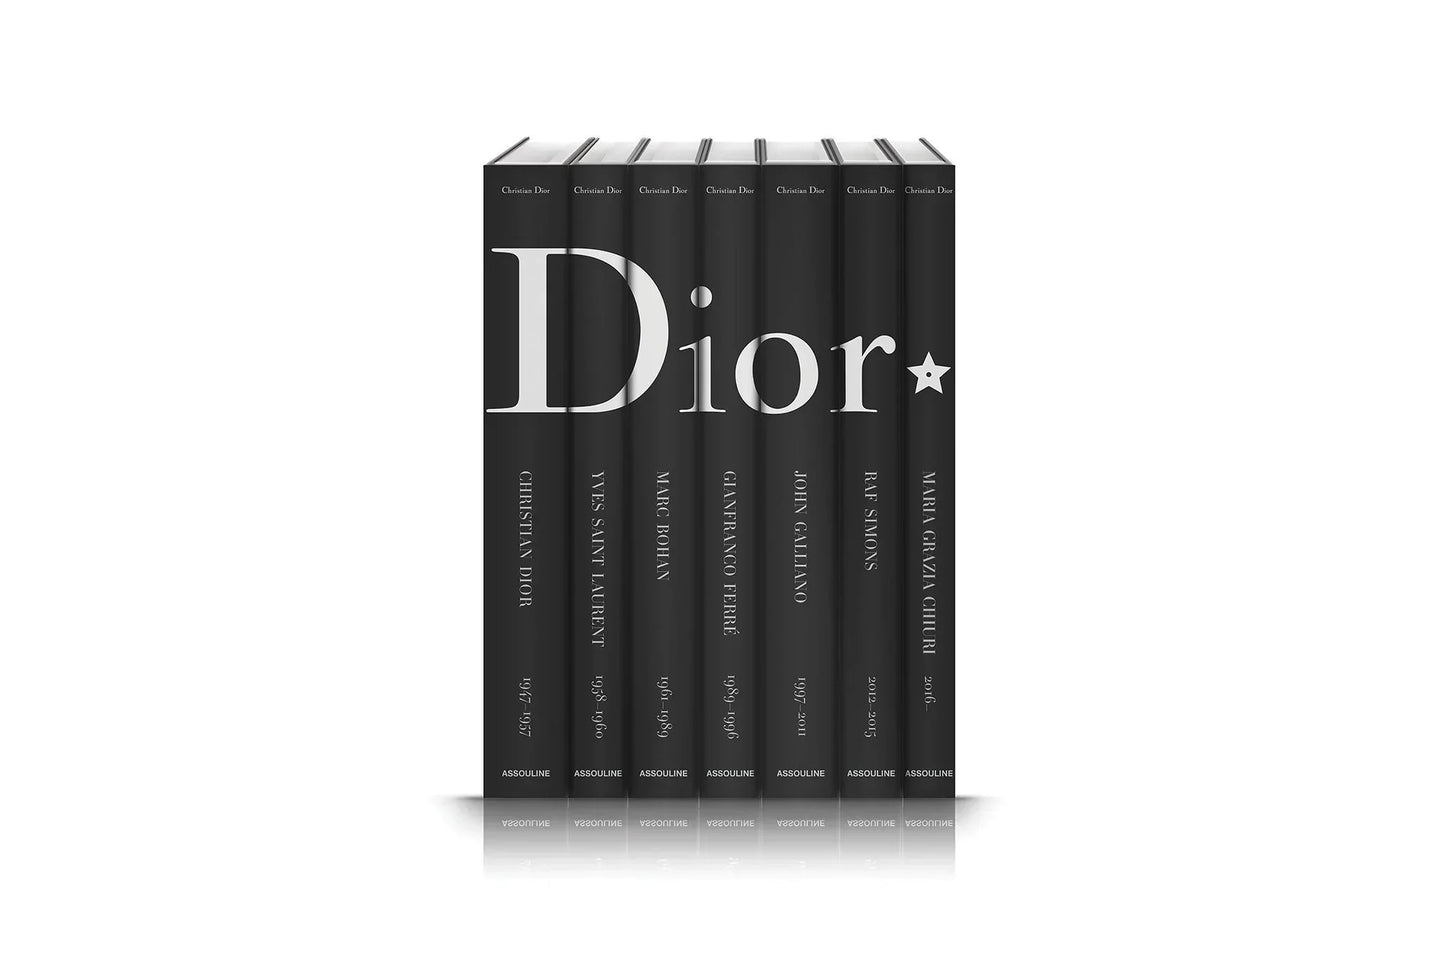 dior by christian dior: 1947-1957 1